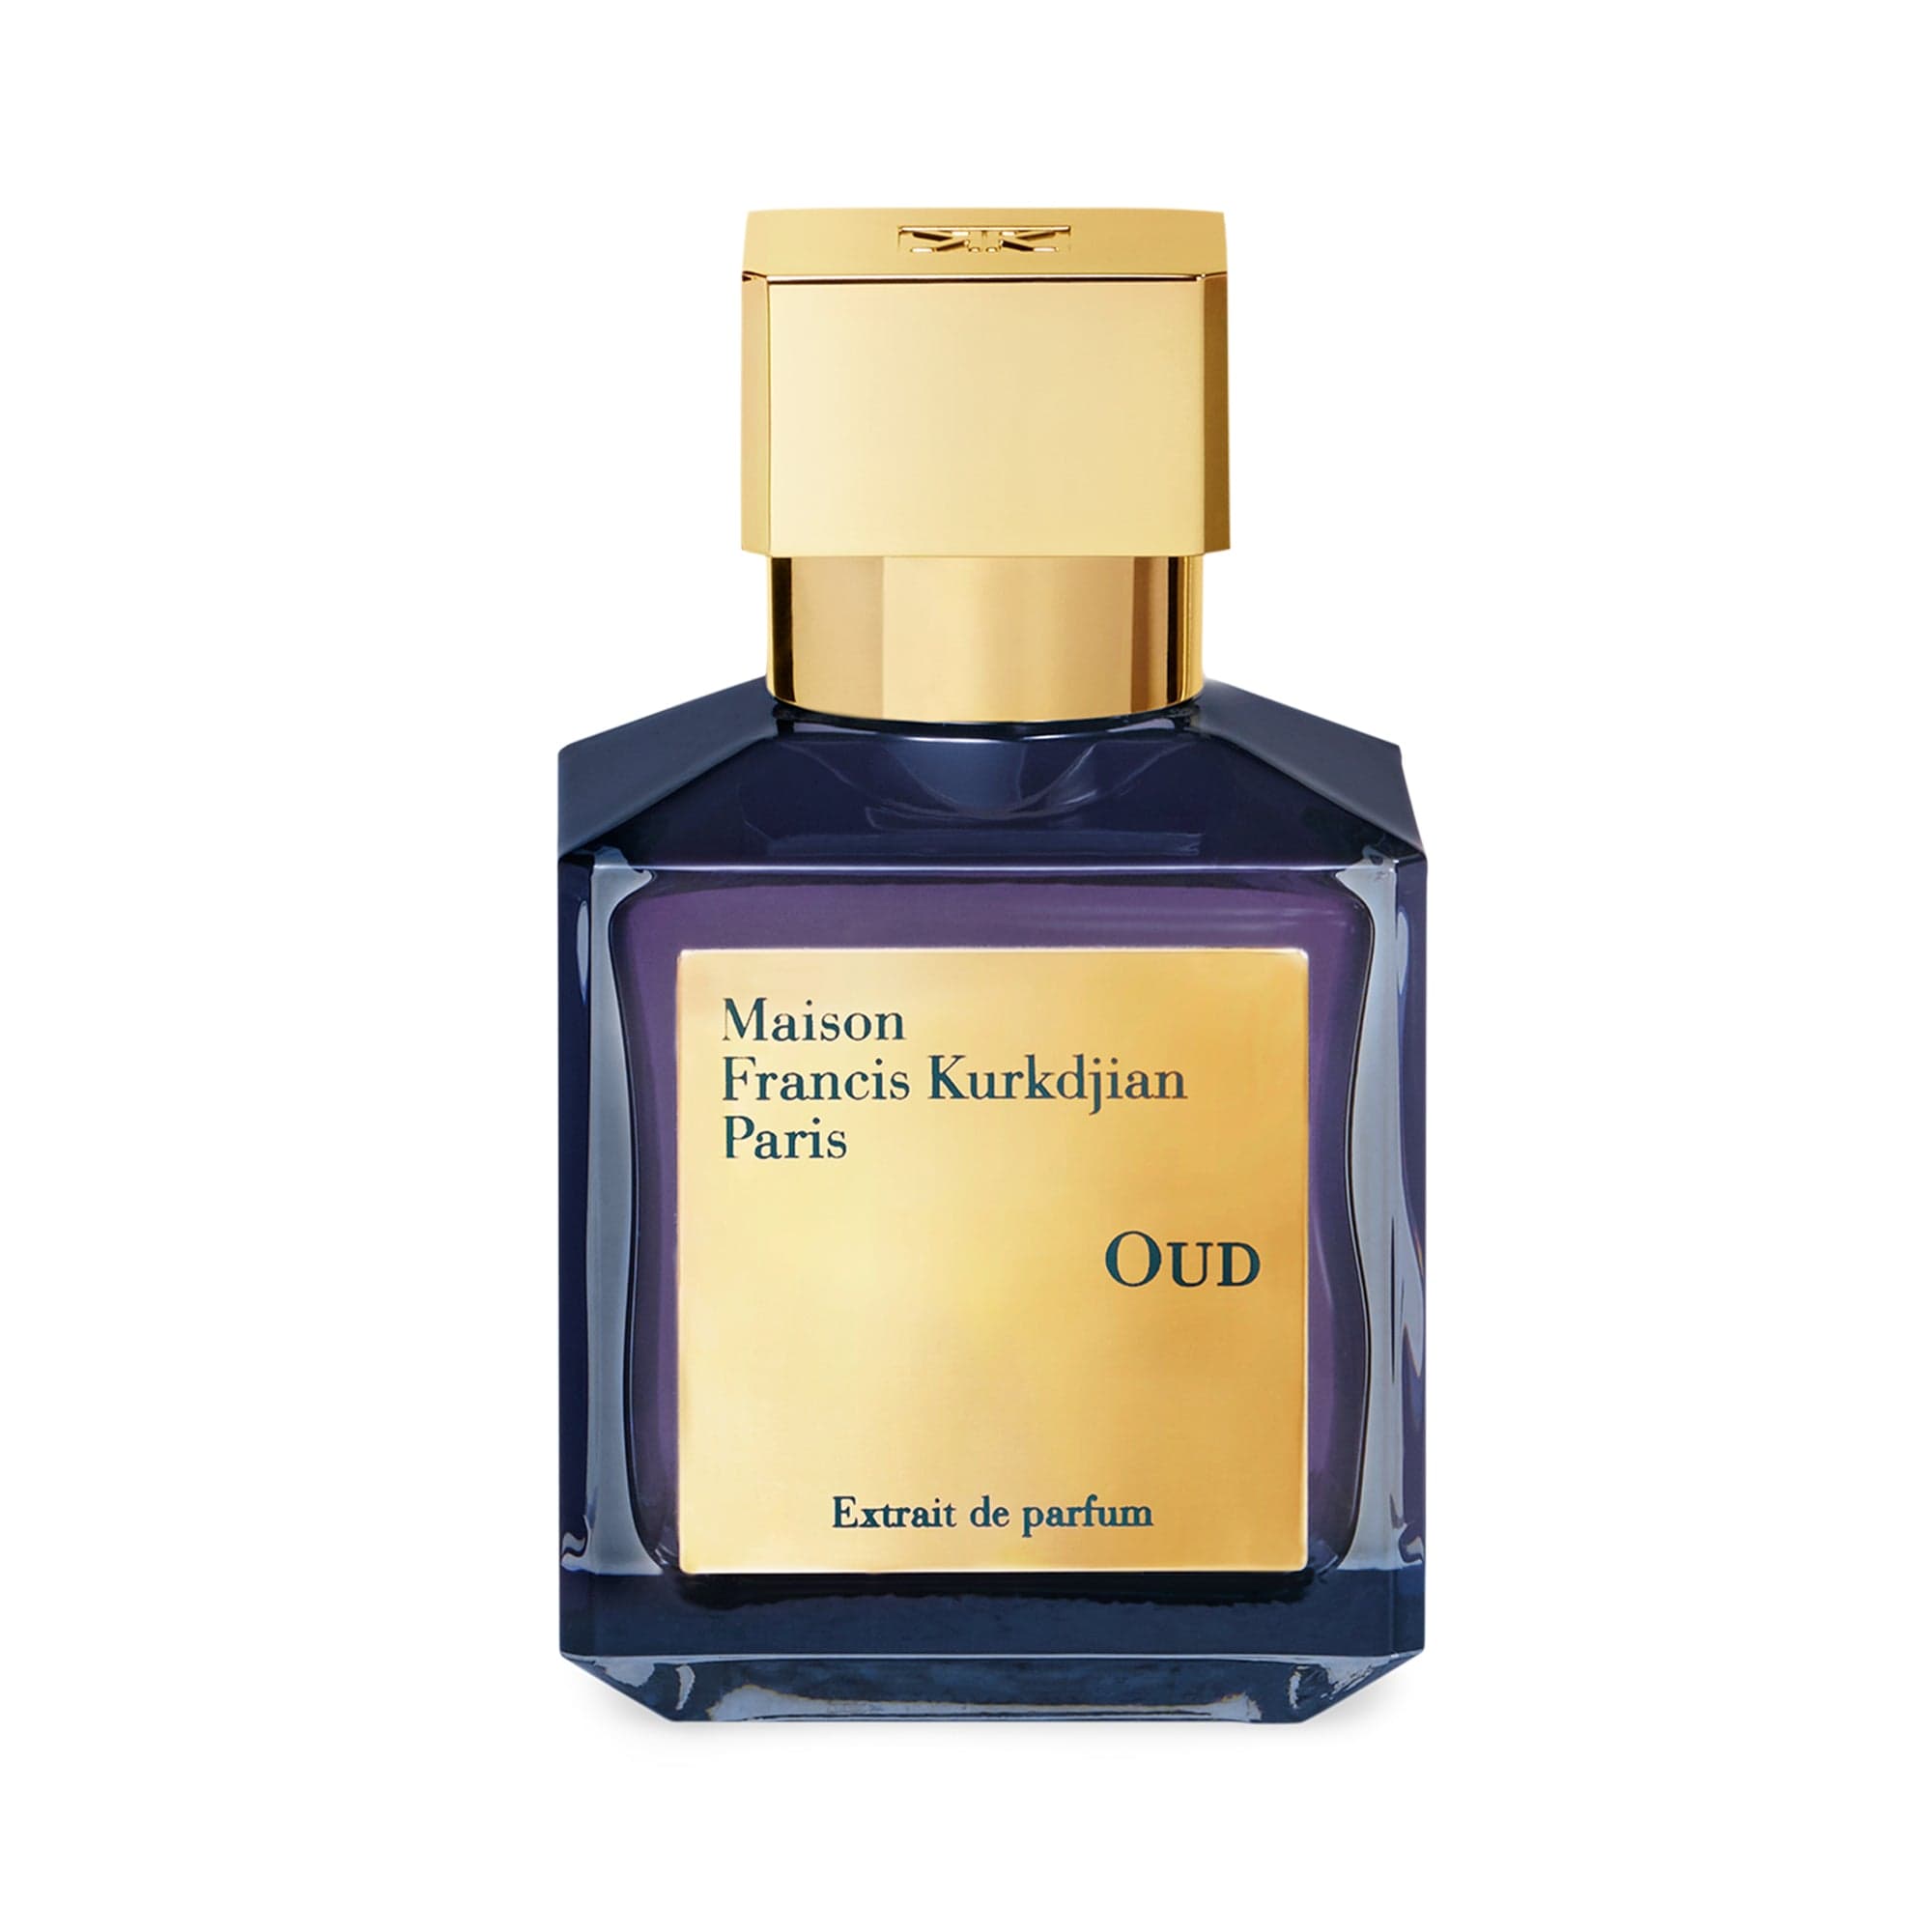 OUD Maison Francis Kurkdjian Perfume Extract